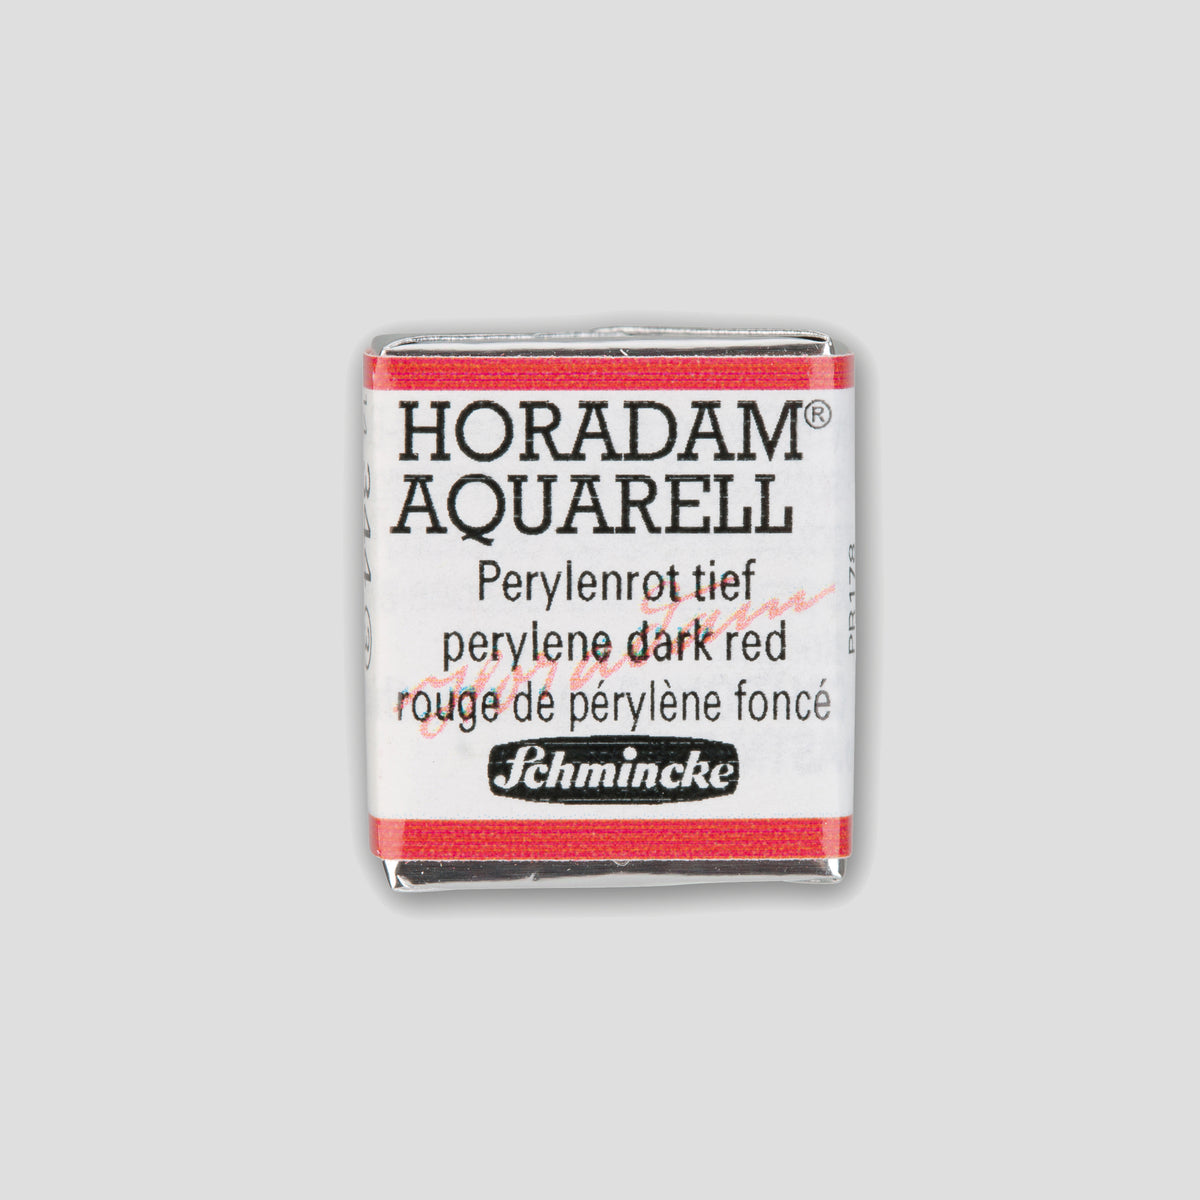 Schmincke Horadam® Half pan 344 Perylene dark red 3